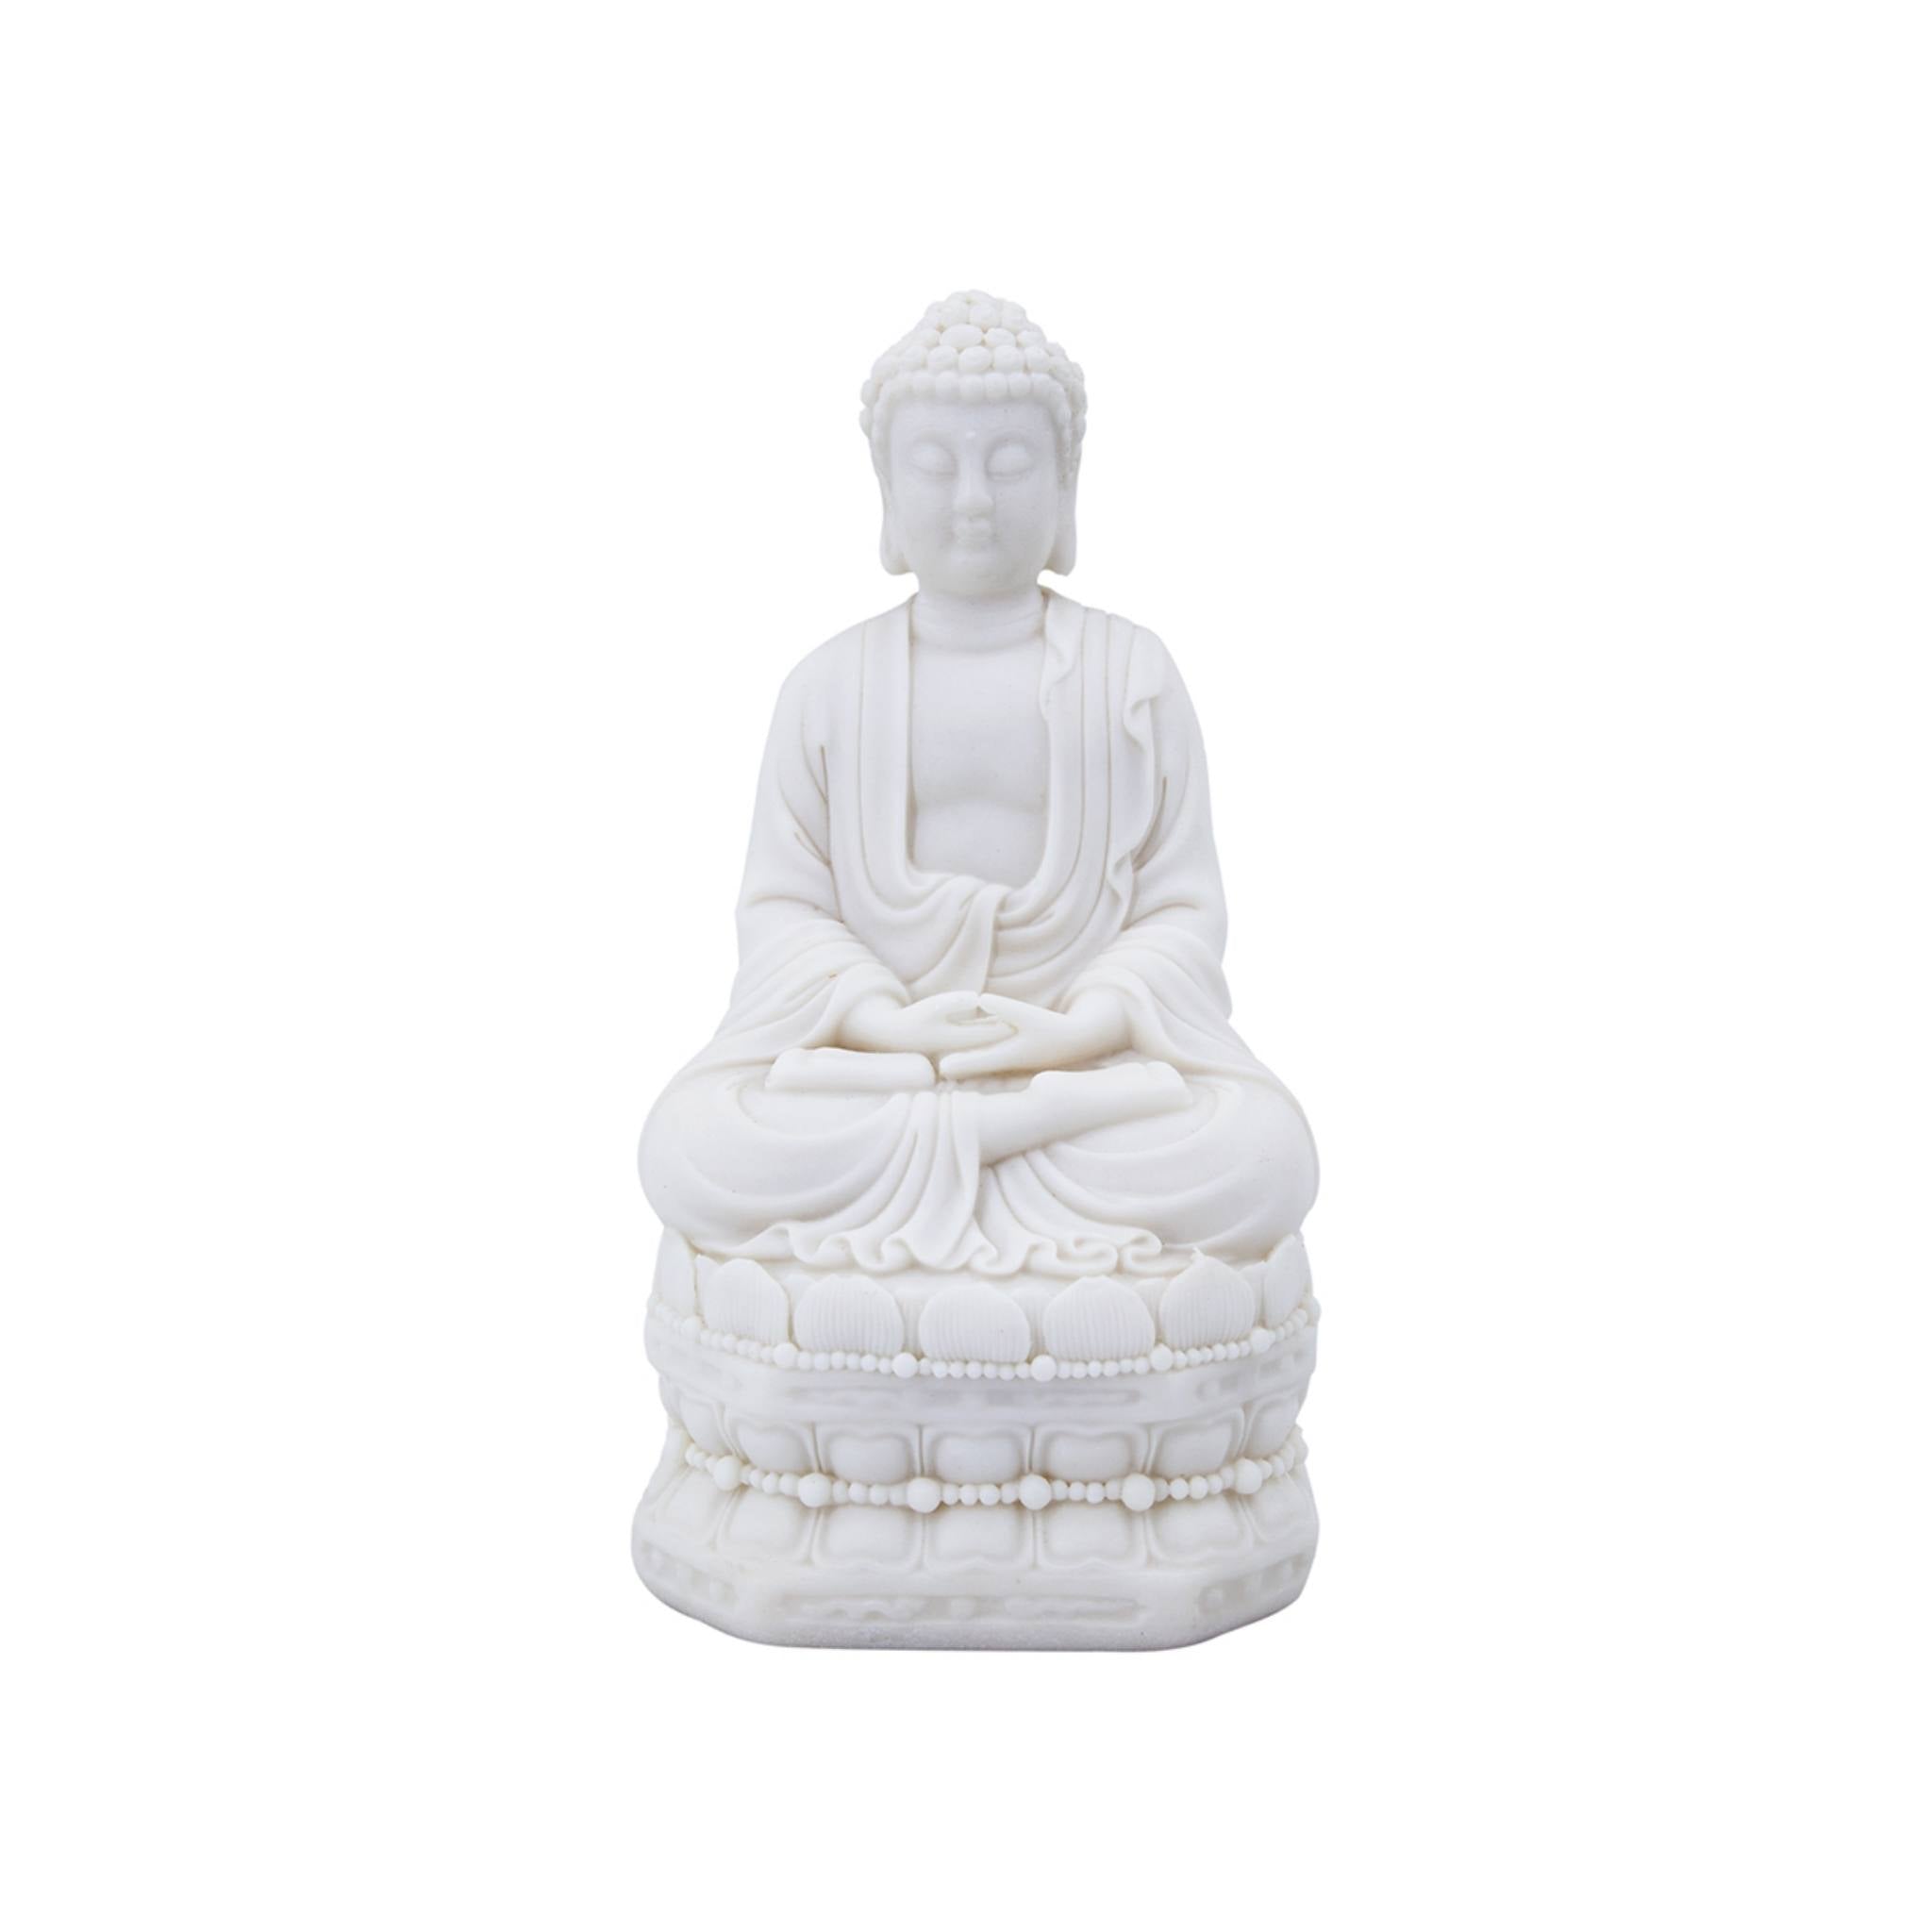 Seated Buddha Sculpture